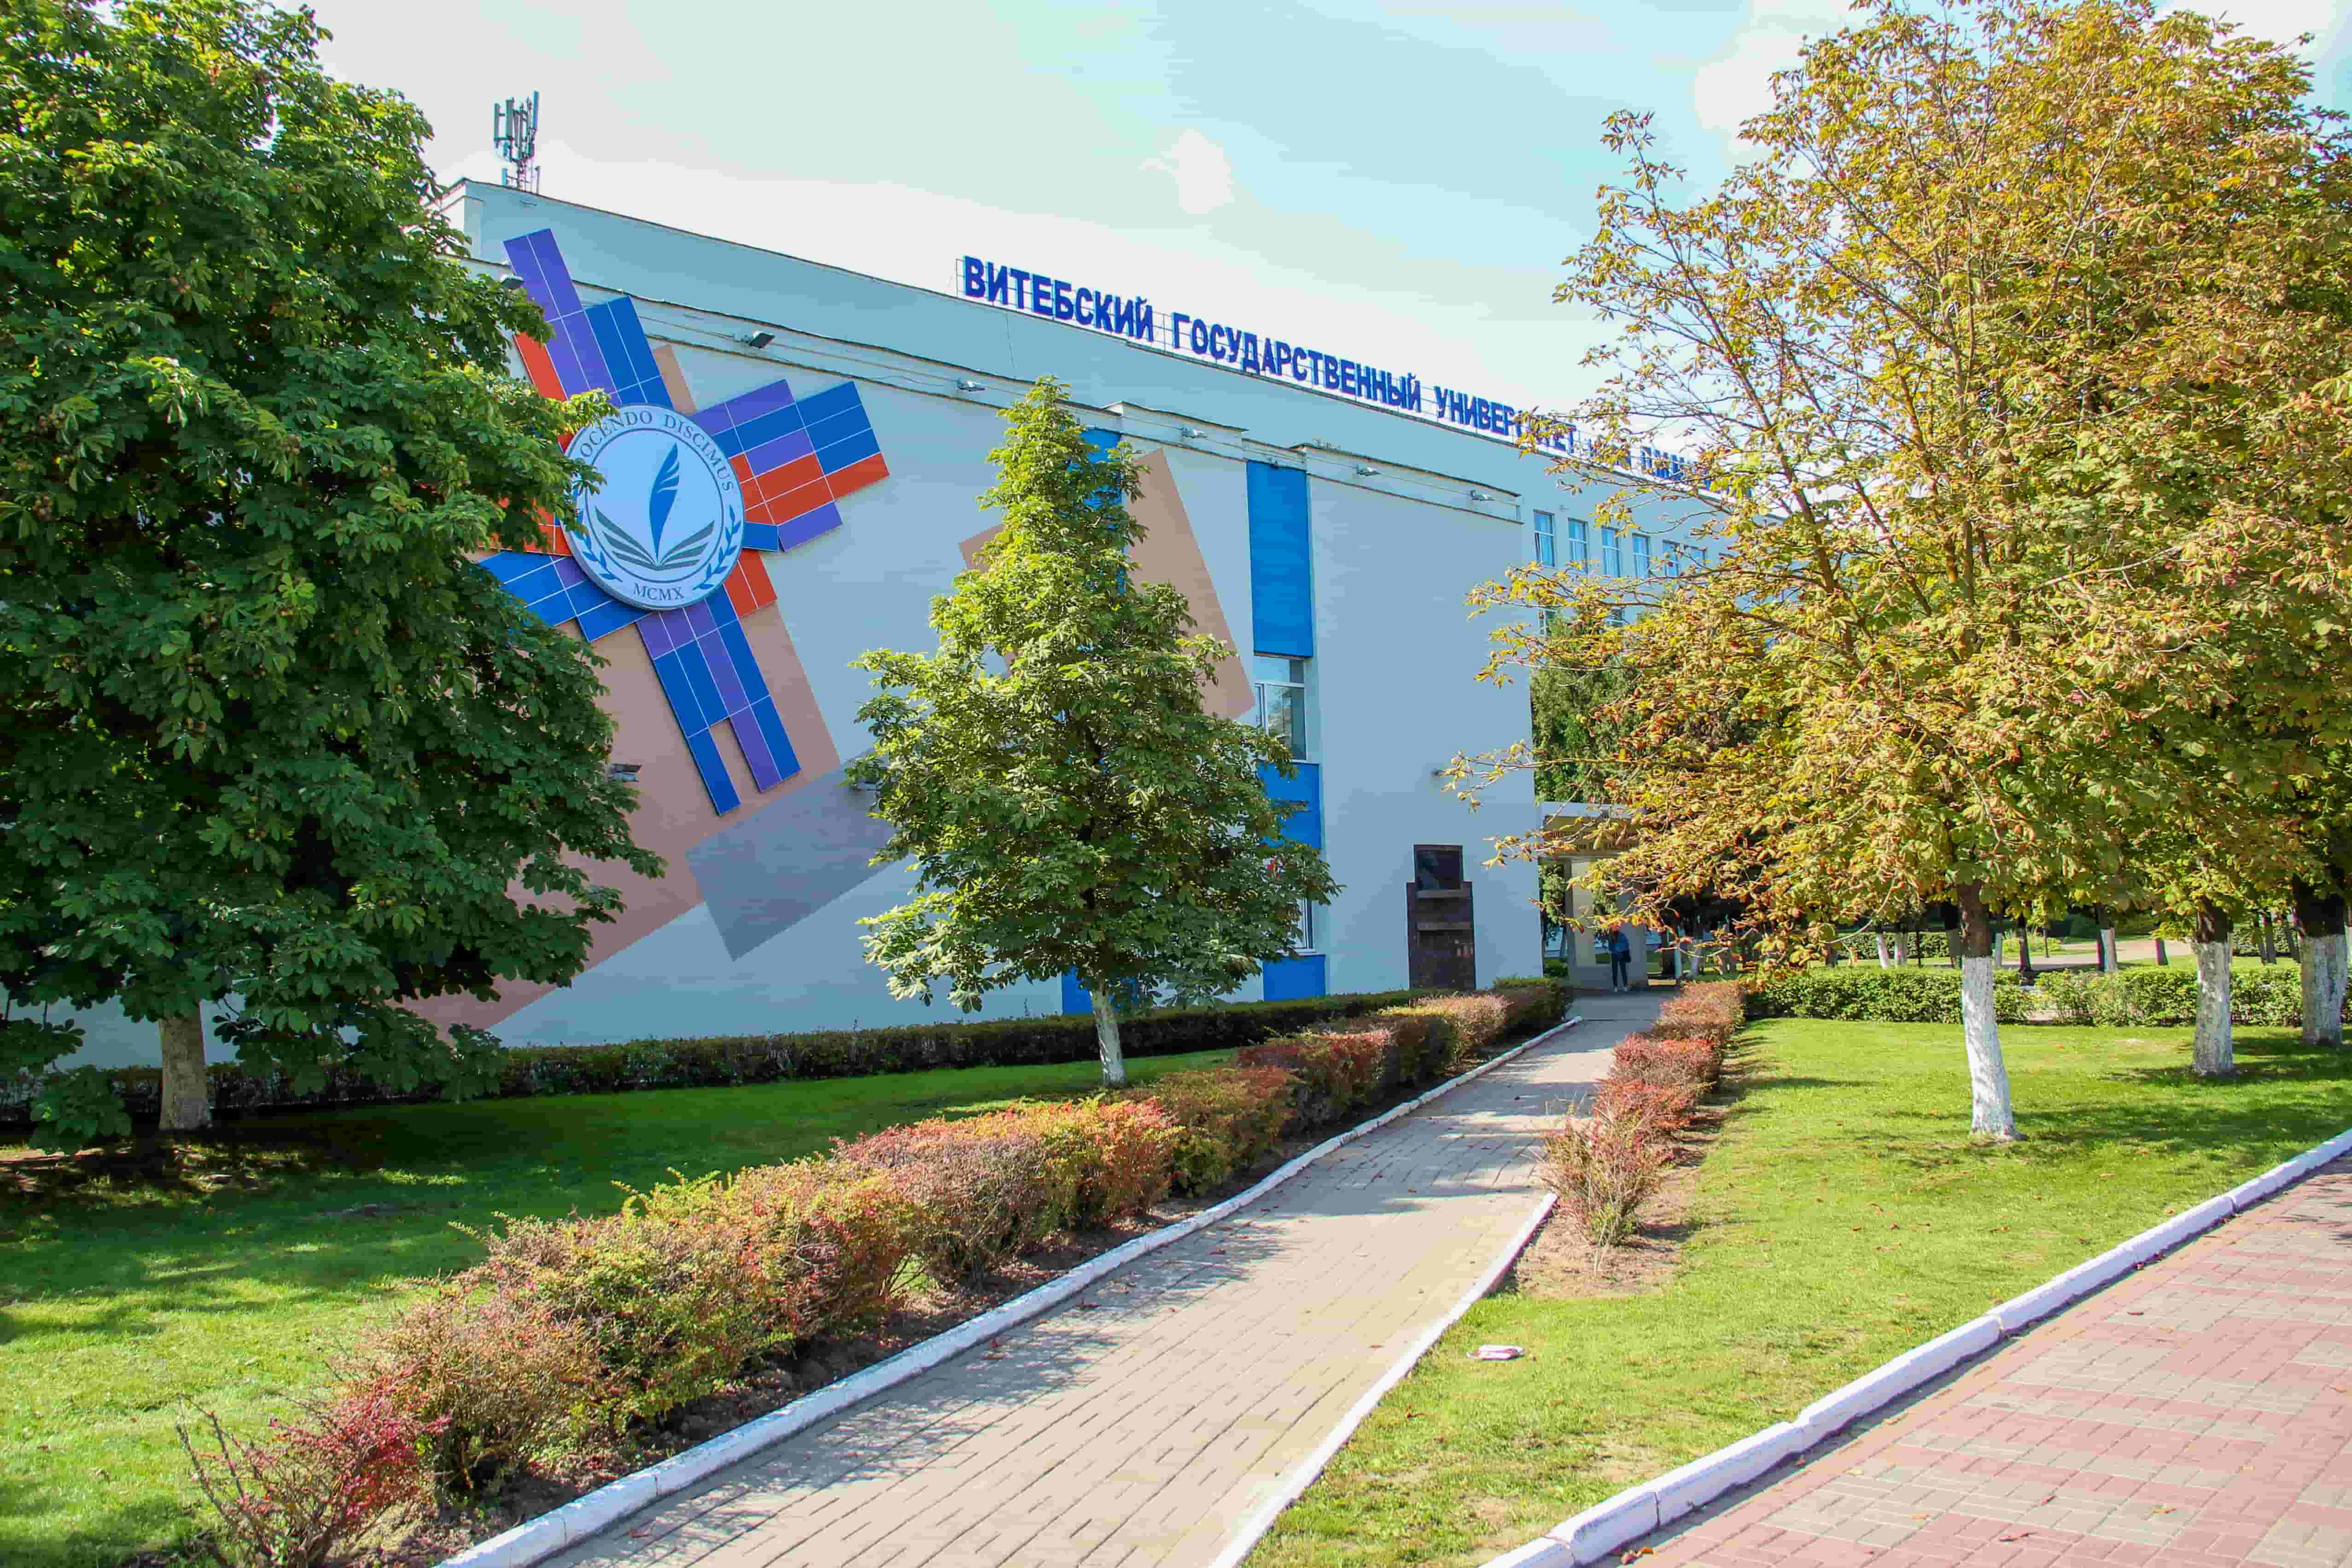 Masherov Vitebsk State University  the main image